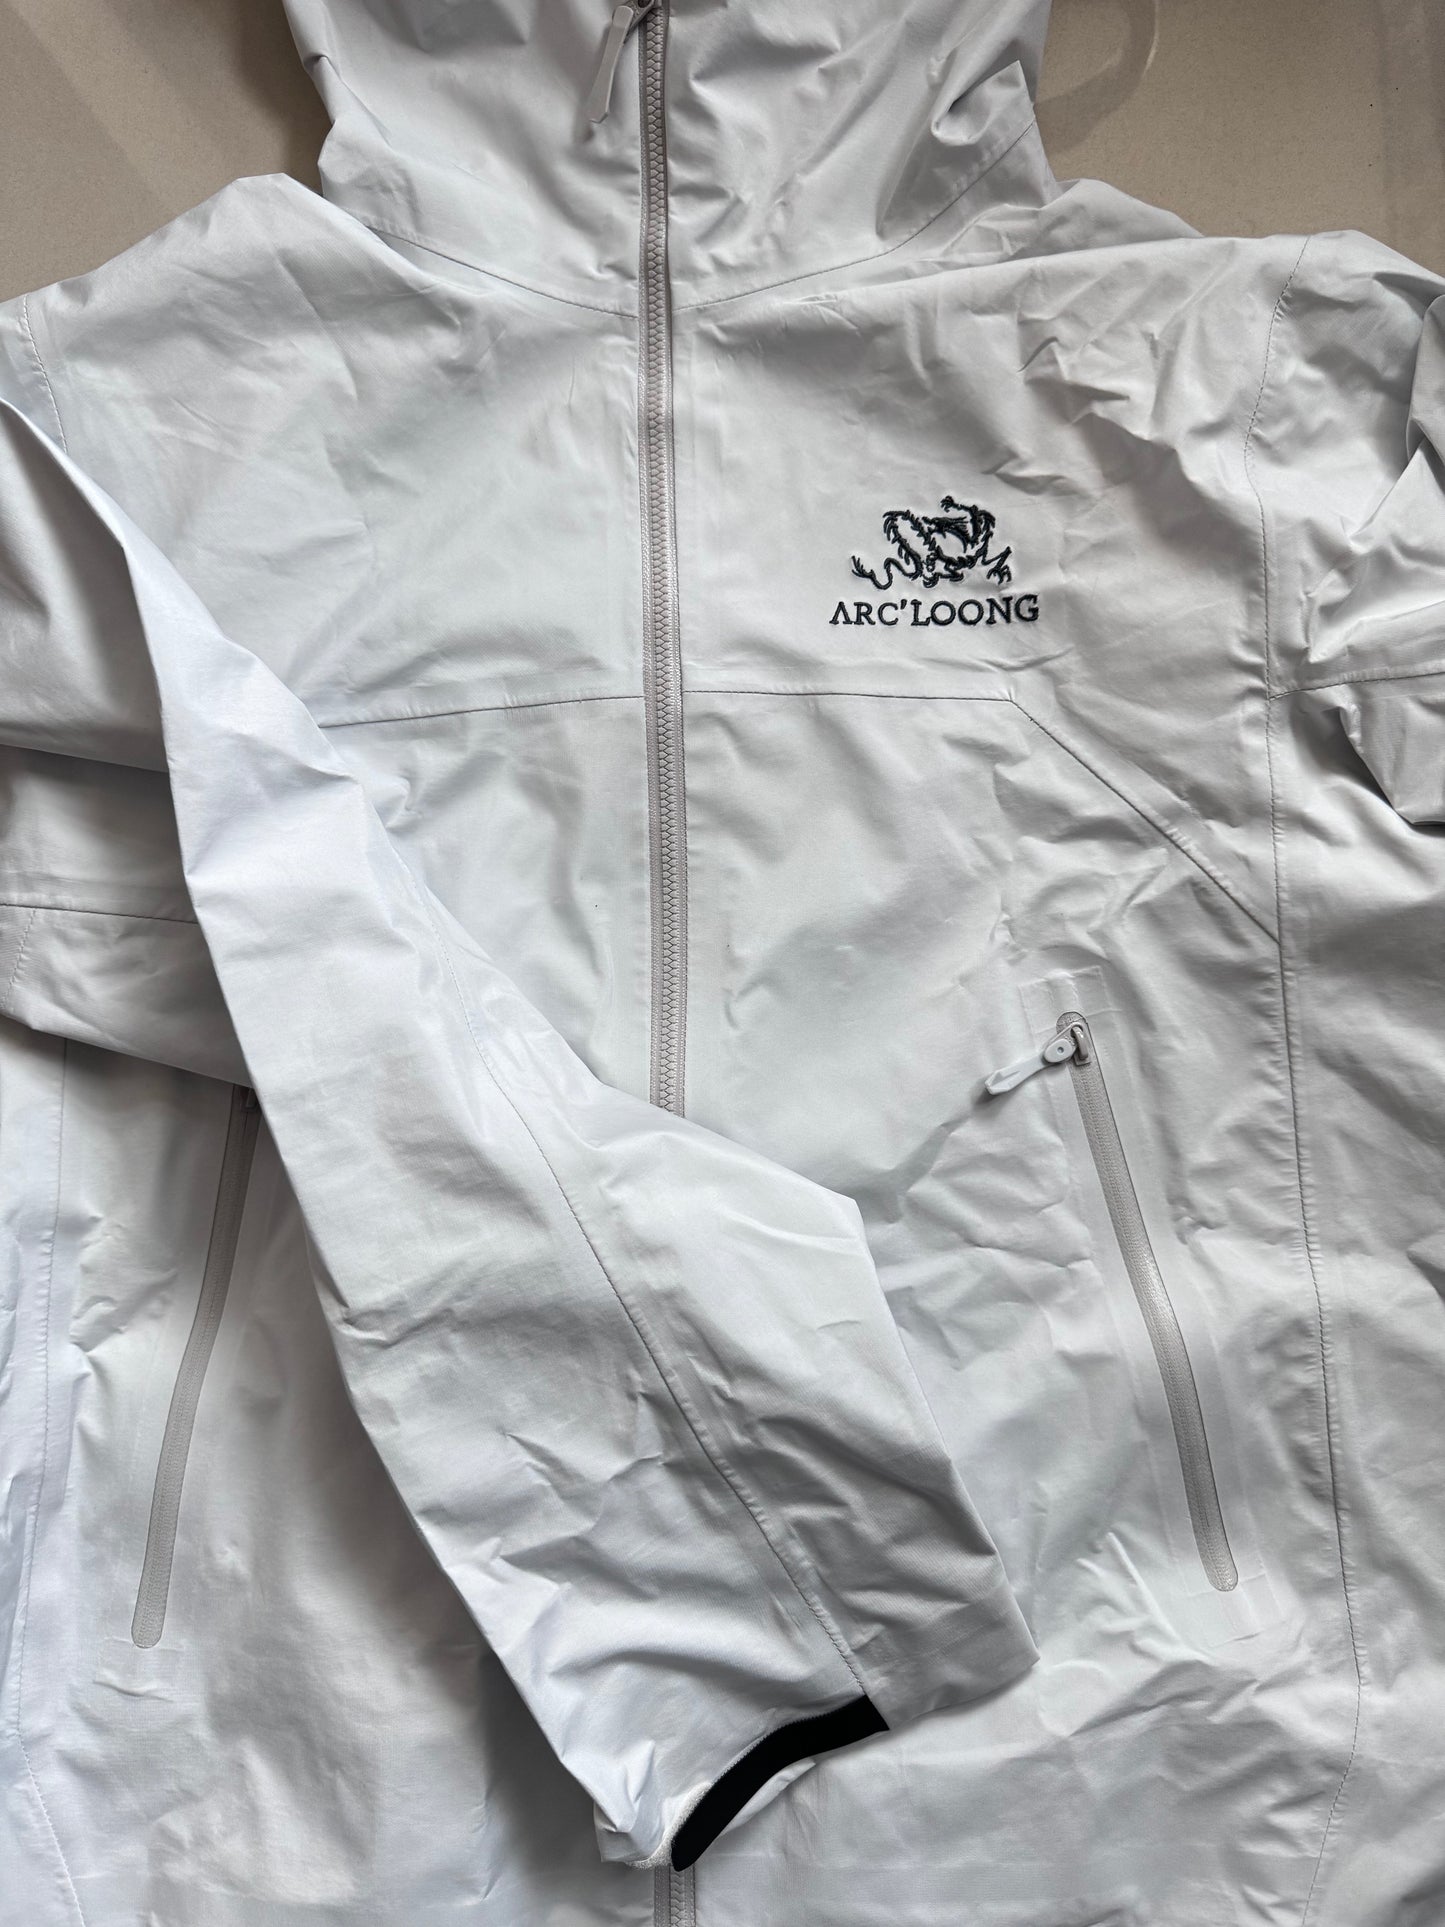 Arc'Loong Anorak Windbreaker Hardshell 3L Jacket unisex | Nylon & Spandex, Outdoor Superior Waterproof, Windproof & Breathable